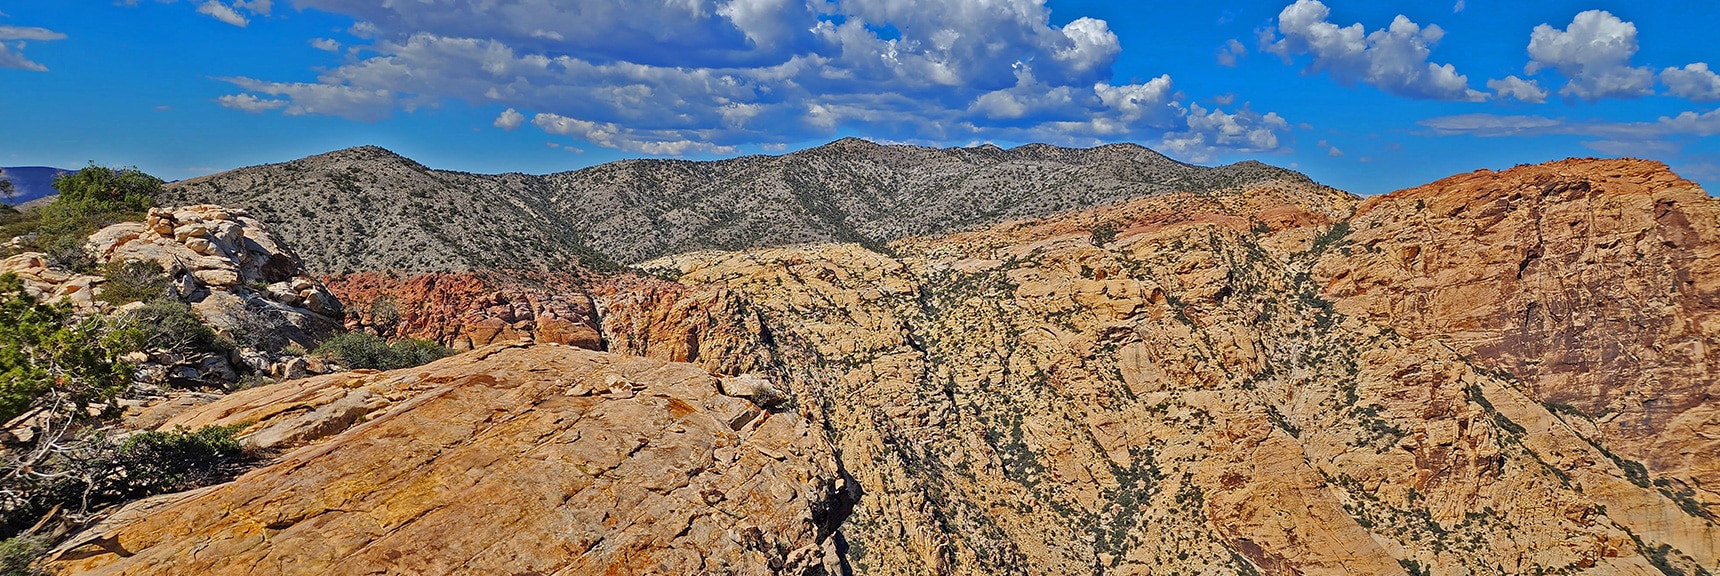 View to Rainbow Mountains Upper Crest Ridgeline. Keystone Thrust Fault Line is Where Color Changes. | Hollow Rock Peak | Rainbow Mountain Wilderness, Nevada